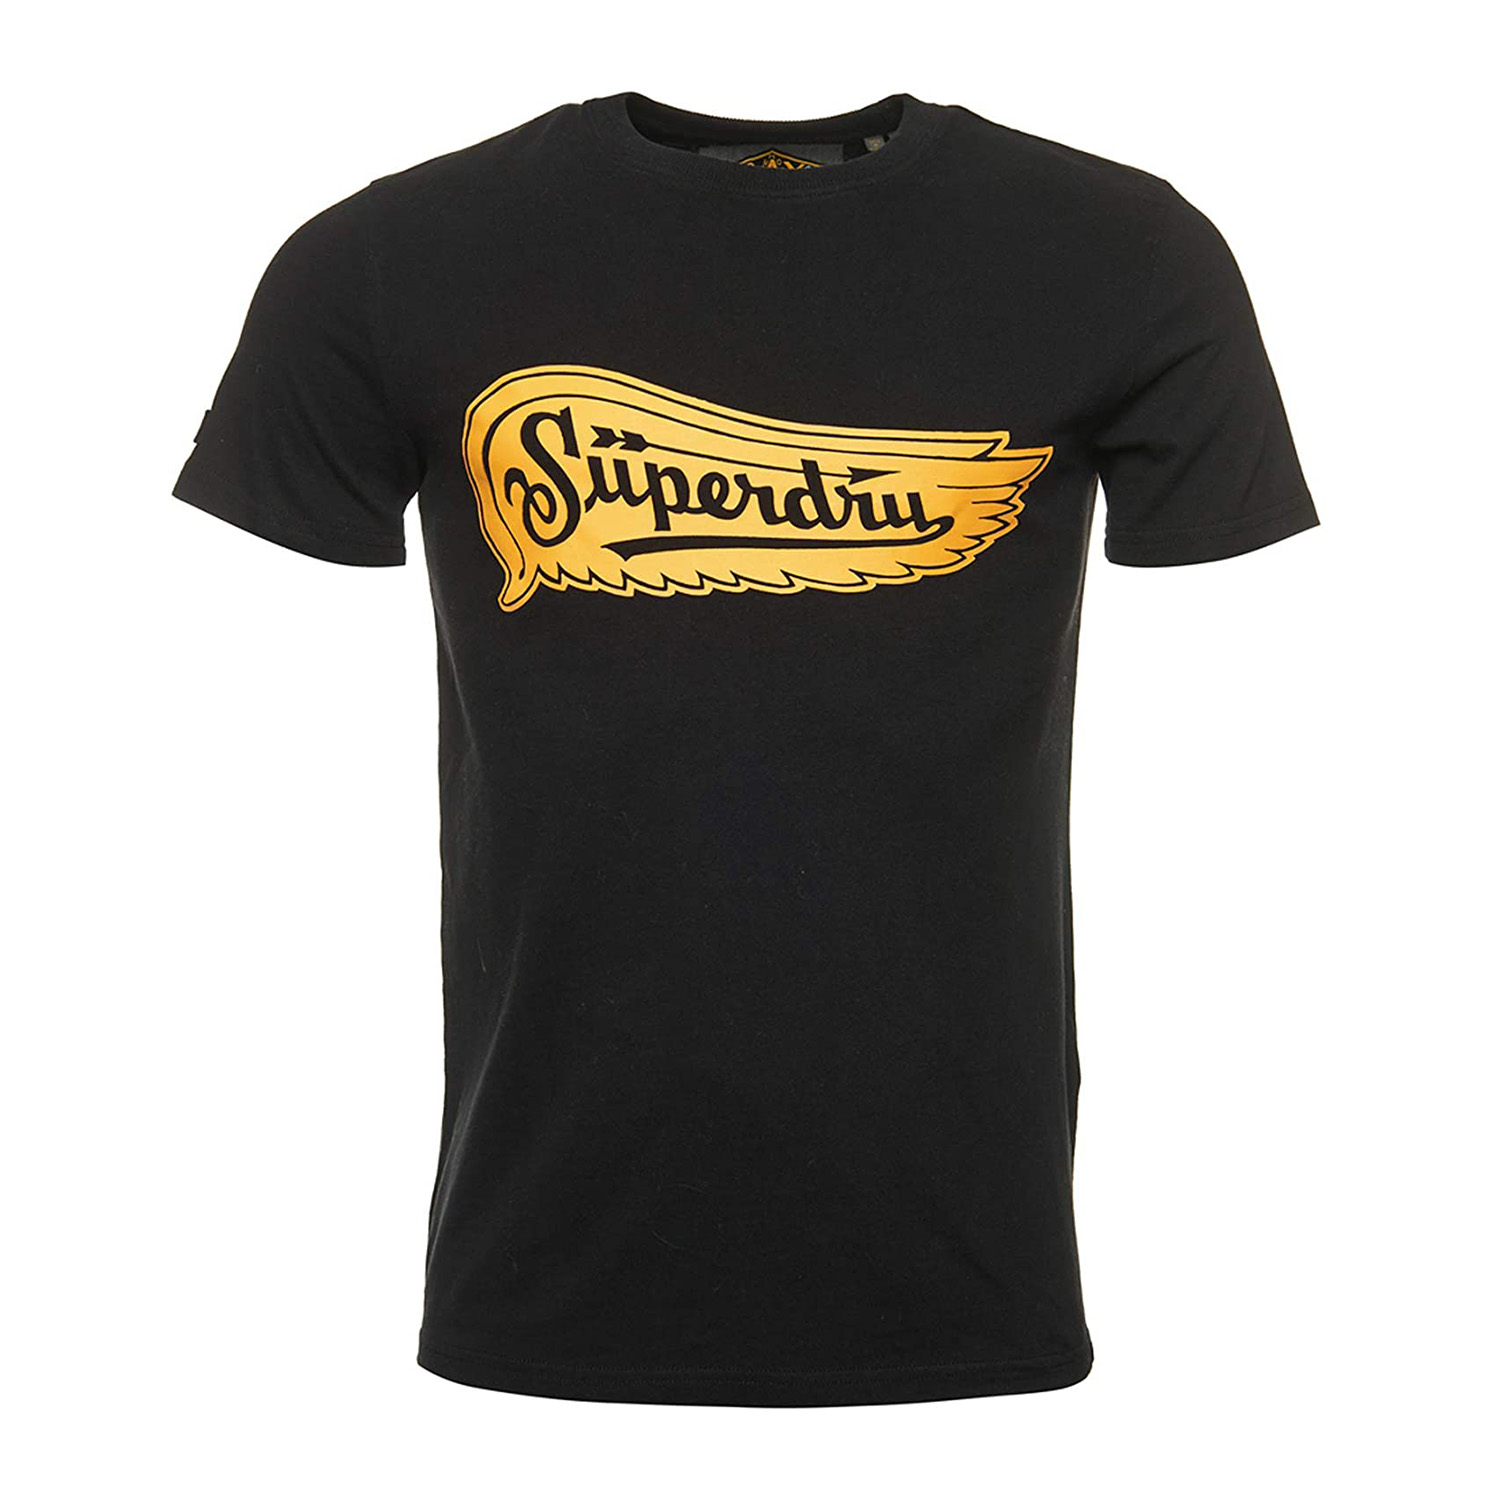 Superdry Herren Merch Store Band Tee T-Shirt Short Sleeve Shirt M1000549A Schwar... von Superdry